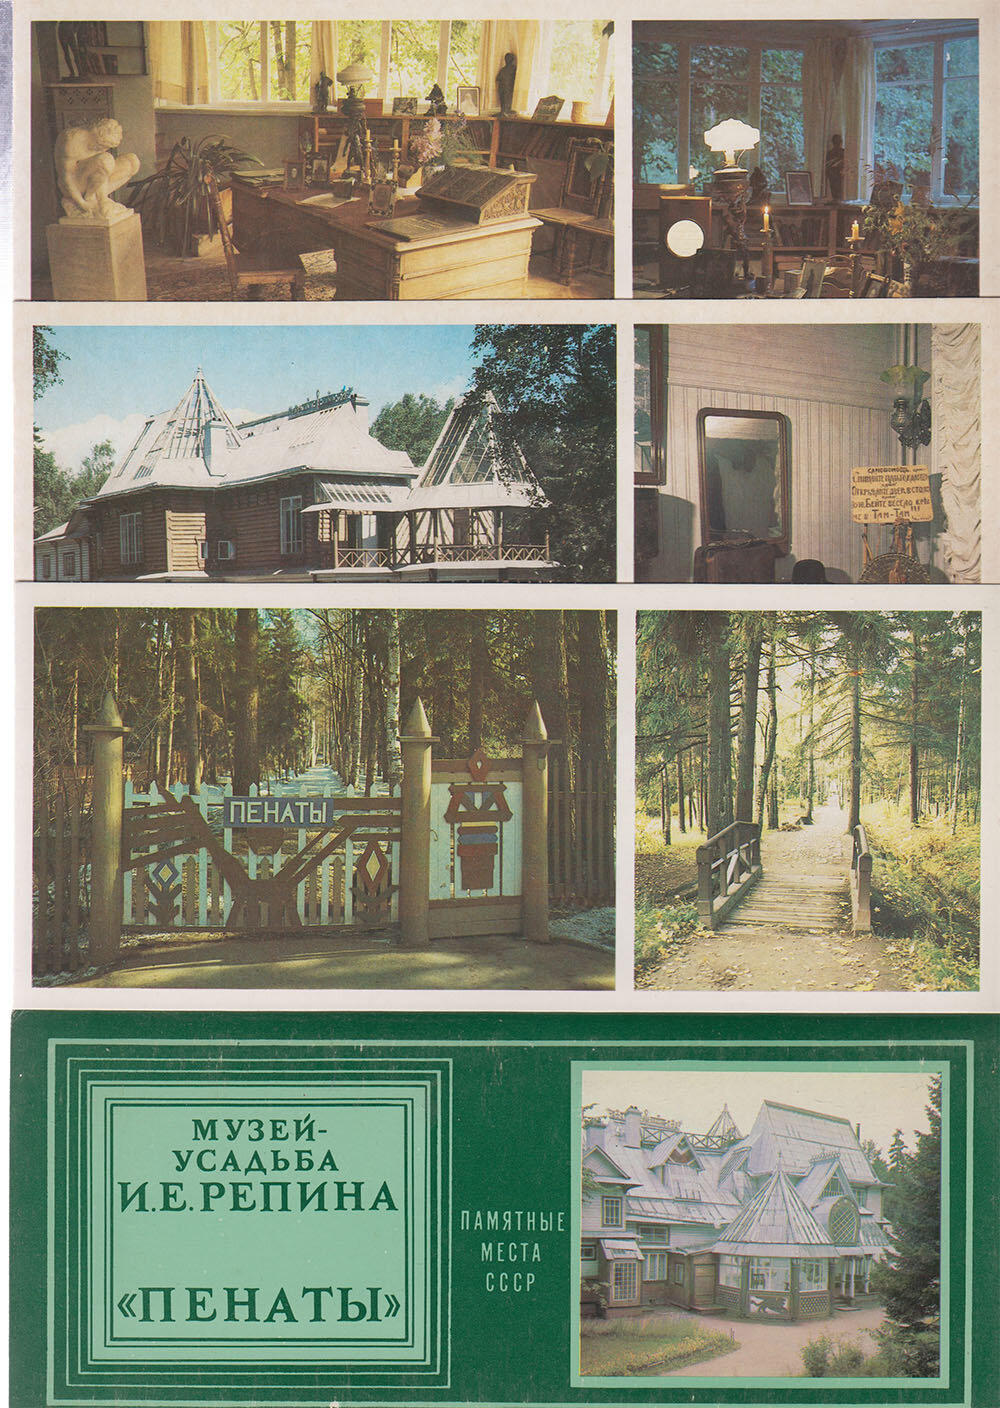 Набор открыток "Музей-усадьба И. Е. Репина", 15 шт, 1982 г.